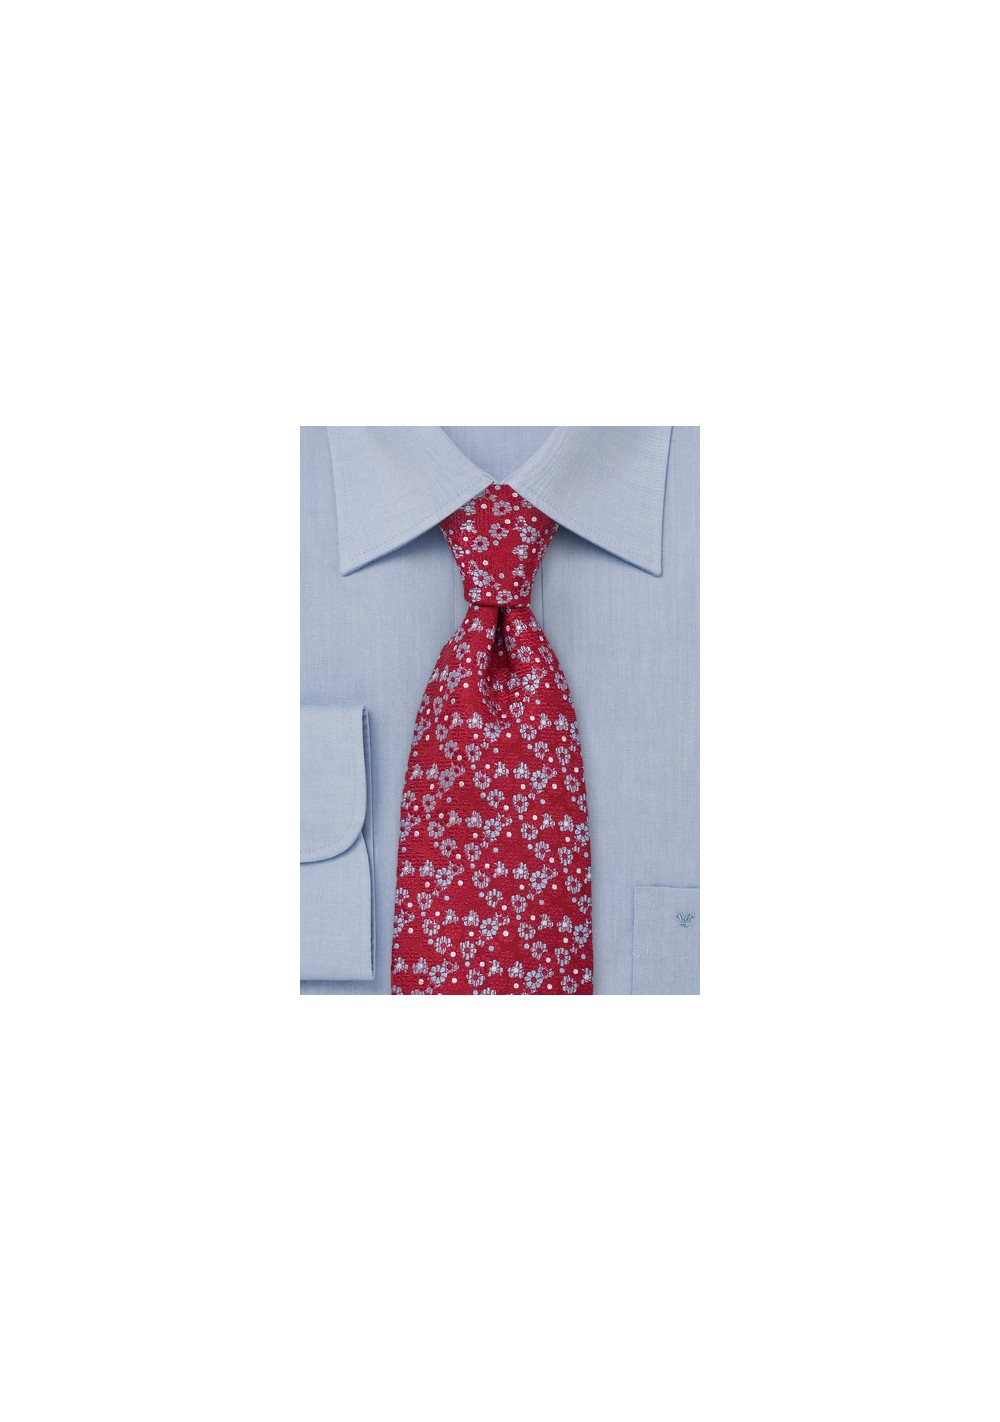 Floral Silk Tie in Red Light Blue